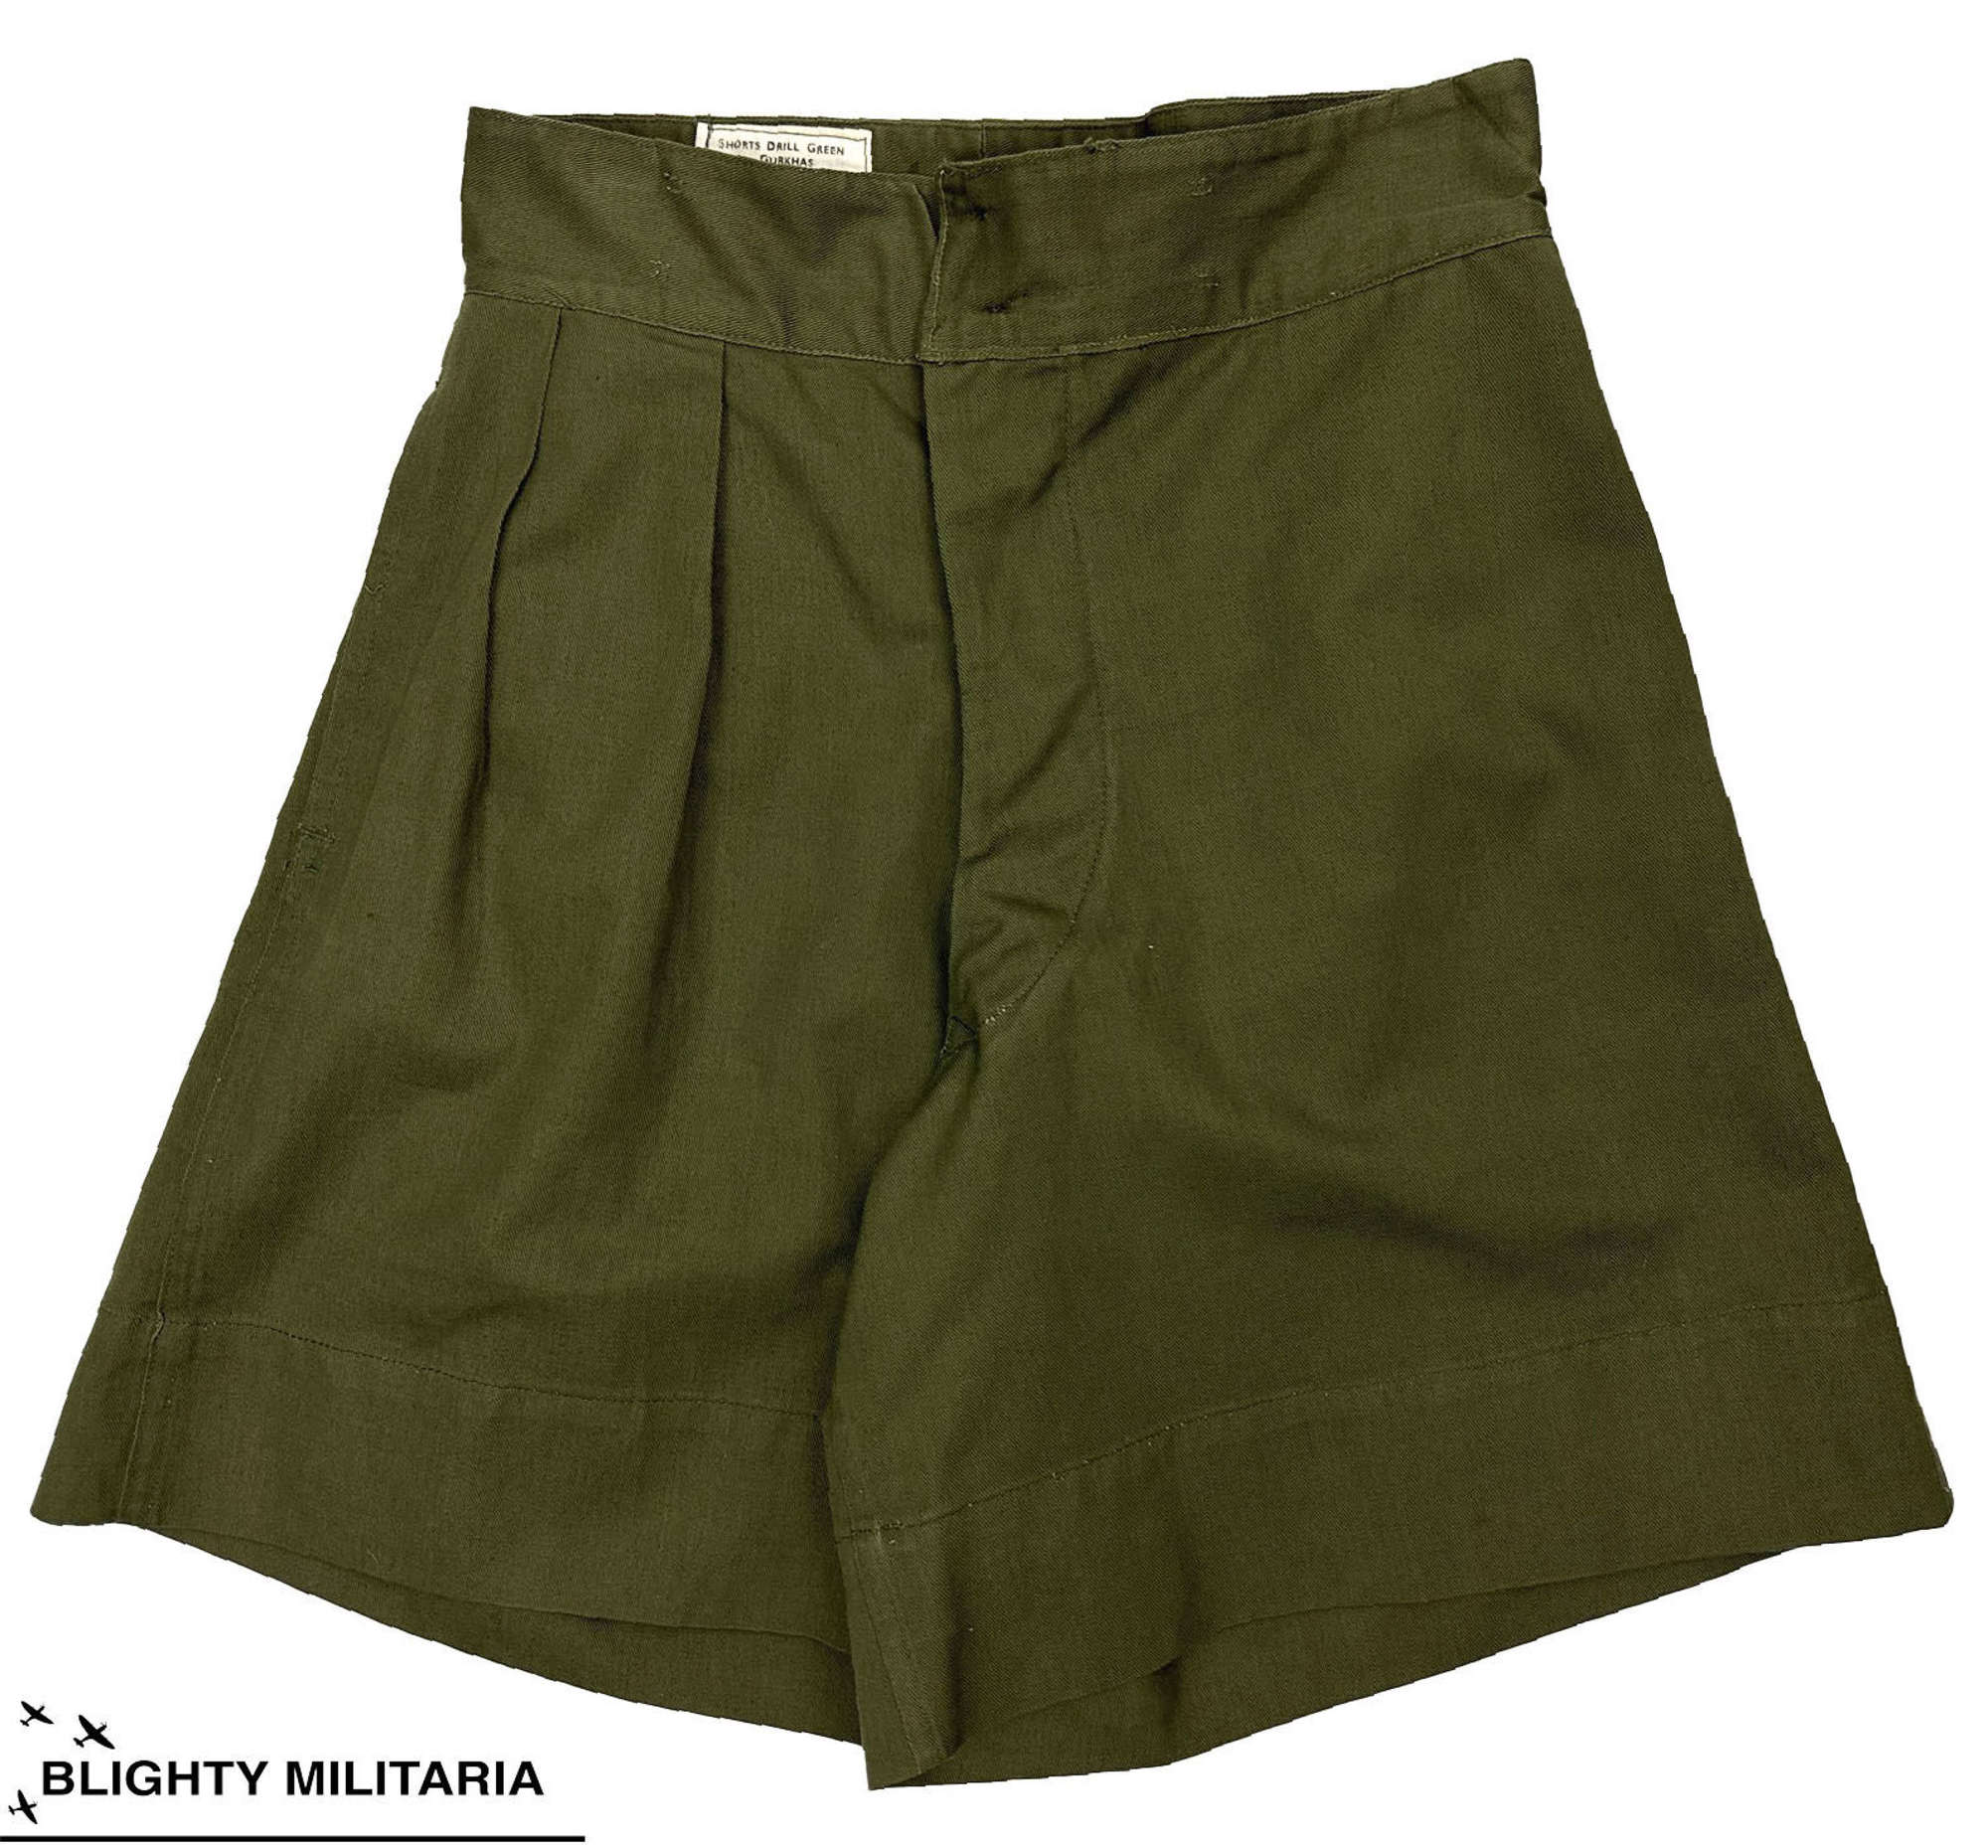 Original 1962 Dated Drill Green Gurkha Shorts - Size 7